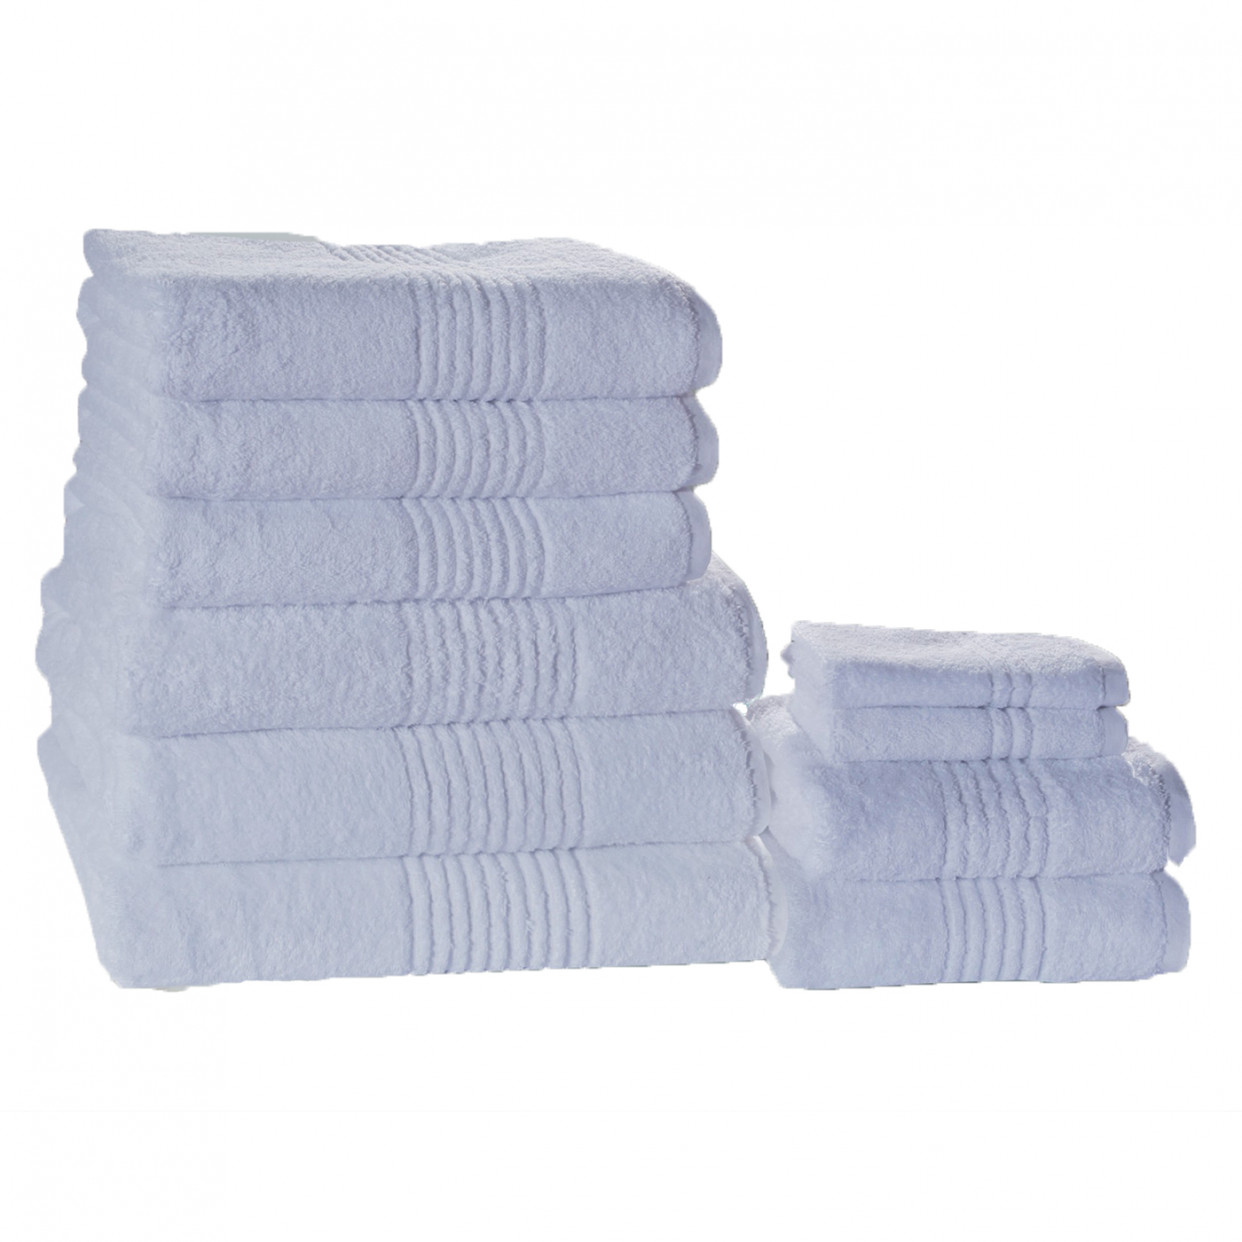 Highams 10 Piece Towel Bale Cotton 550GSM - White>